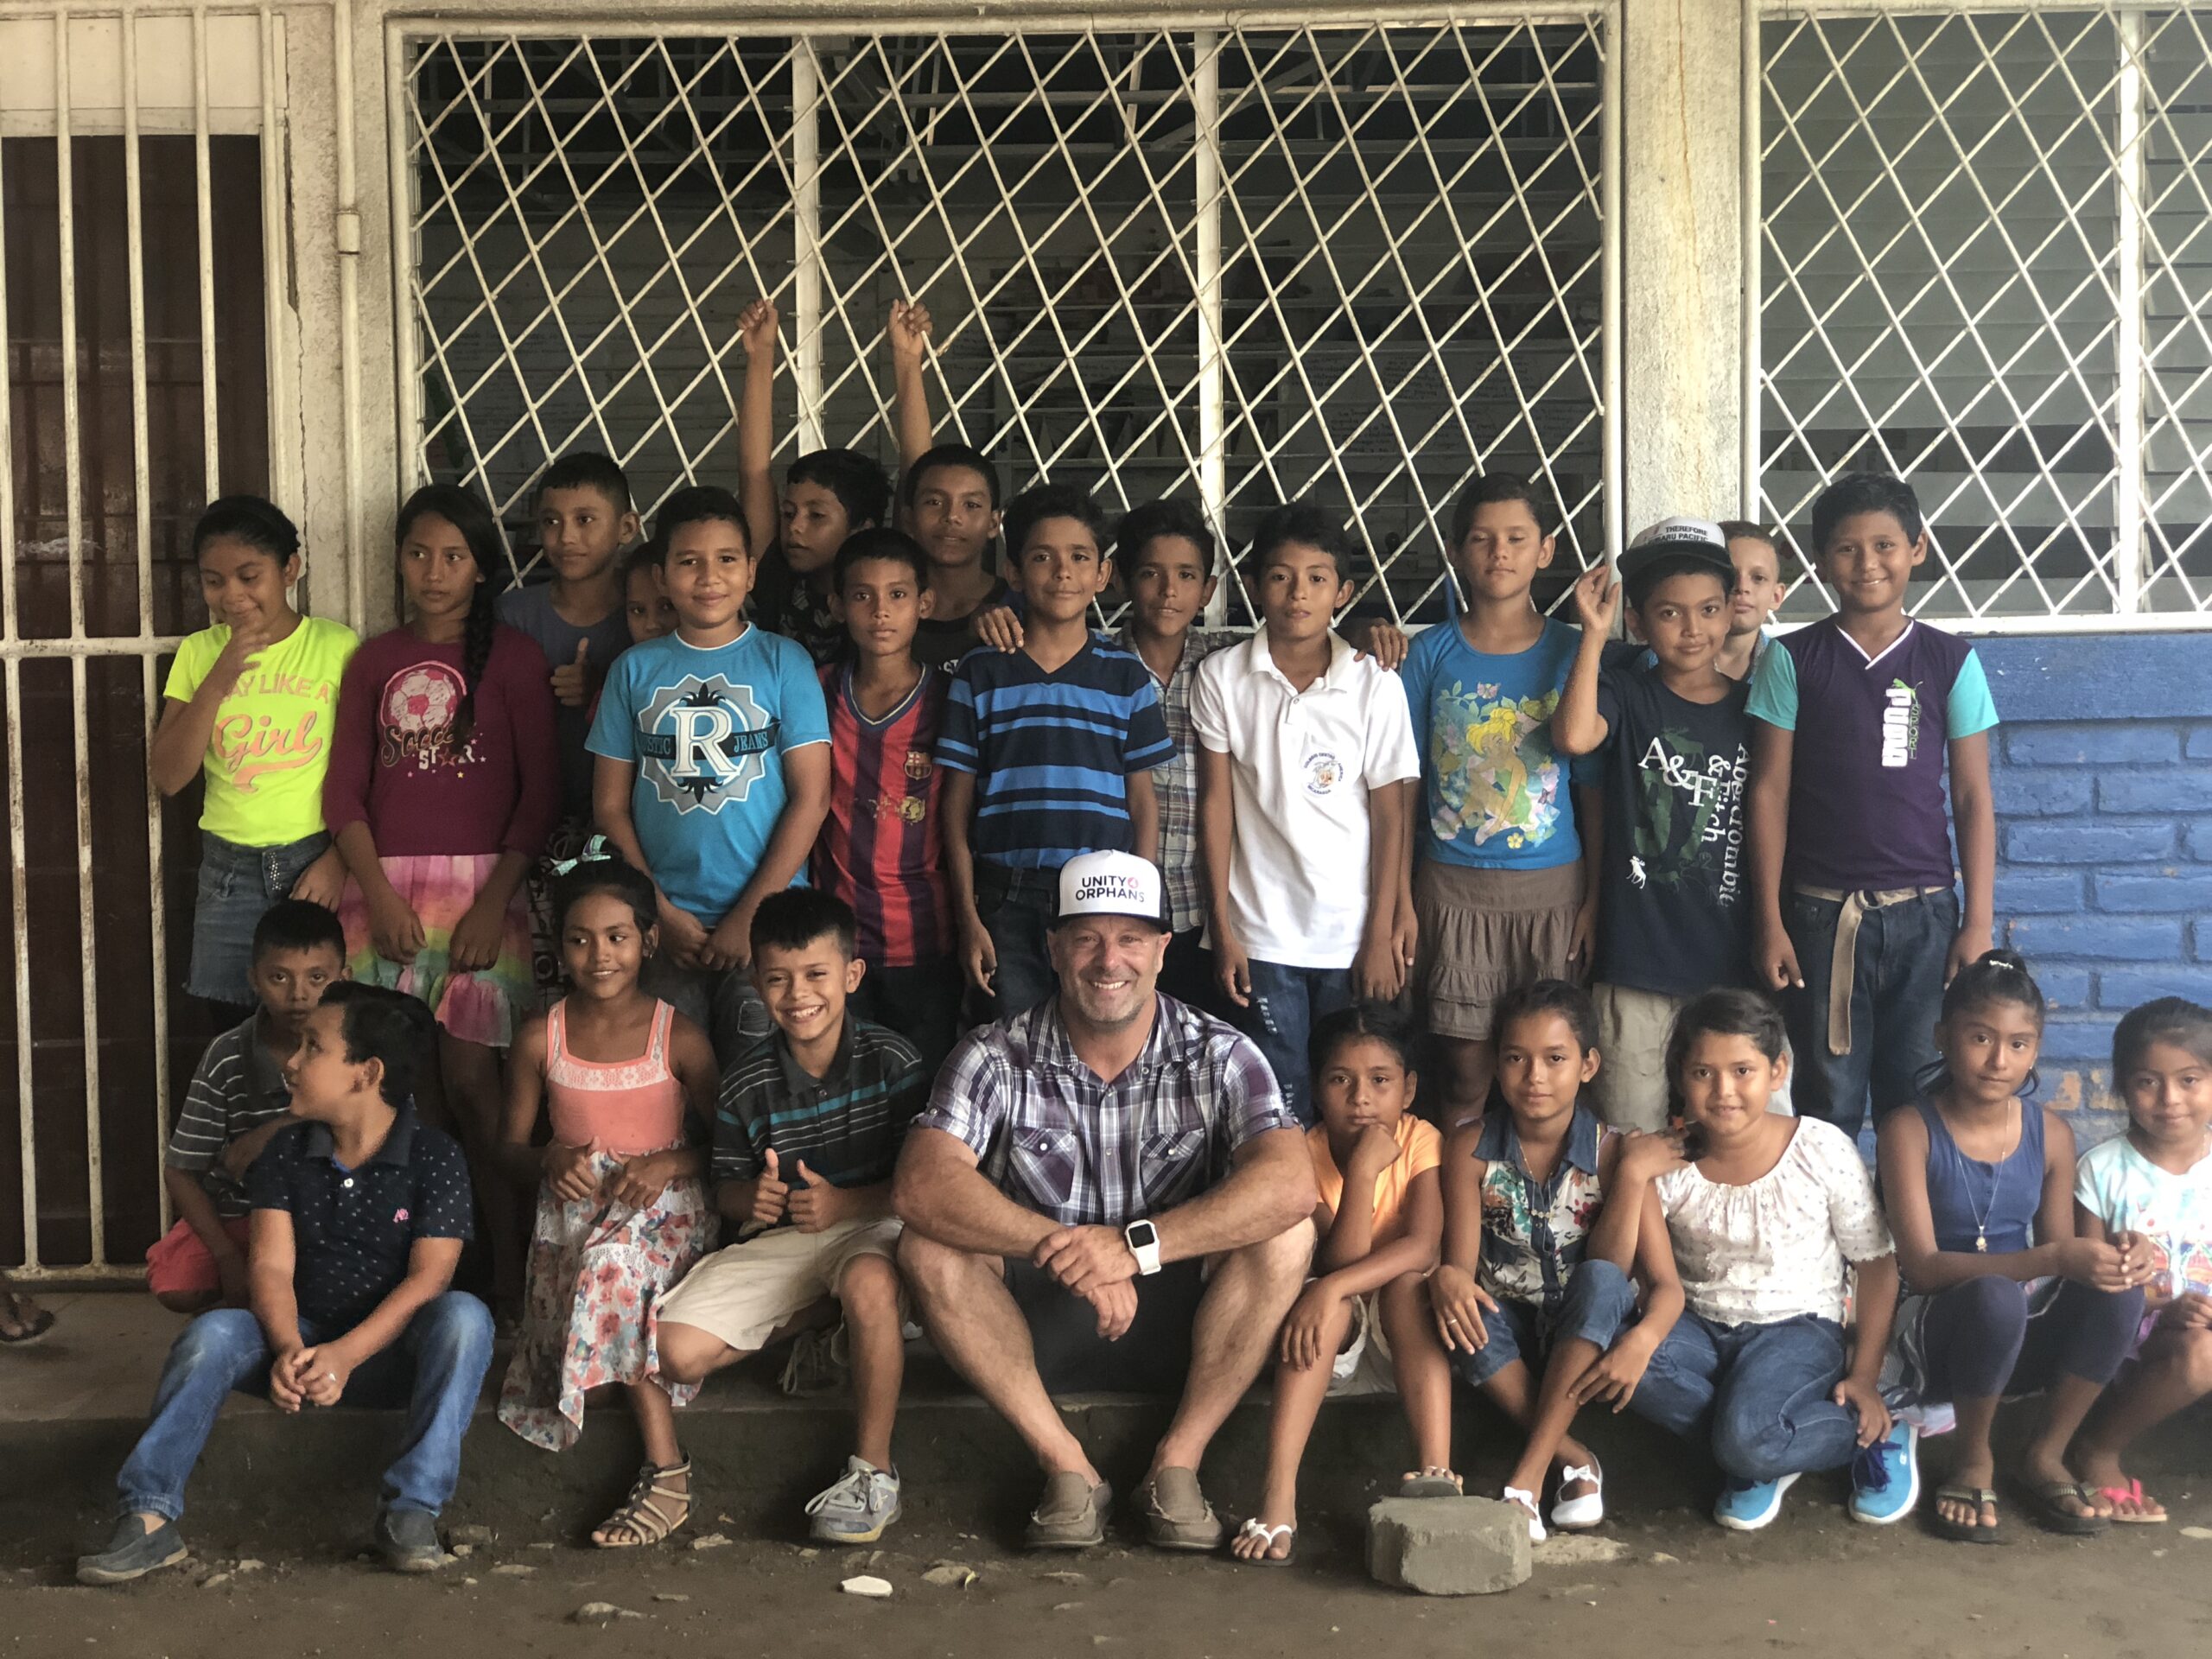 Unity 4 Orphans founder Joe Brandi with ESL students in Nicaragua